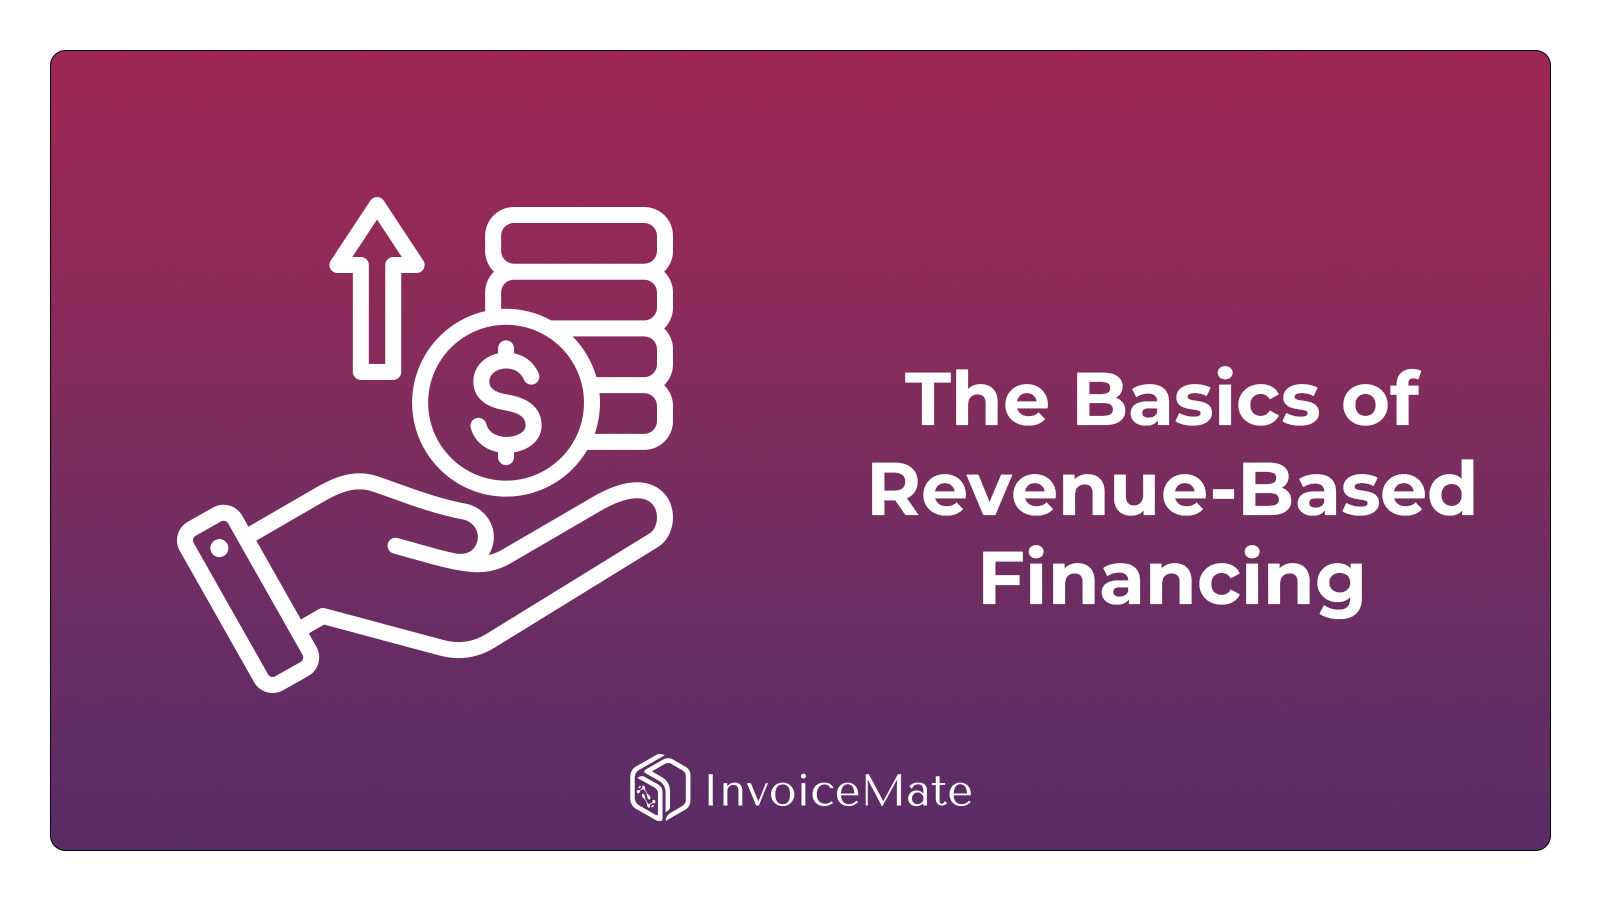 The Basics of Revenue-Based Financing